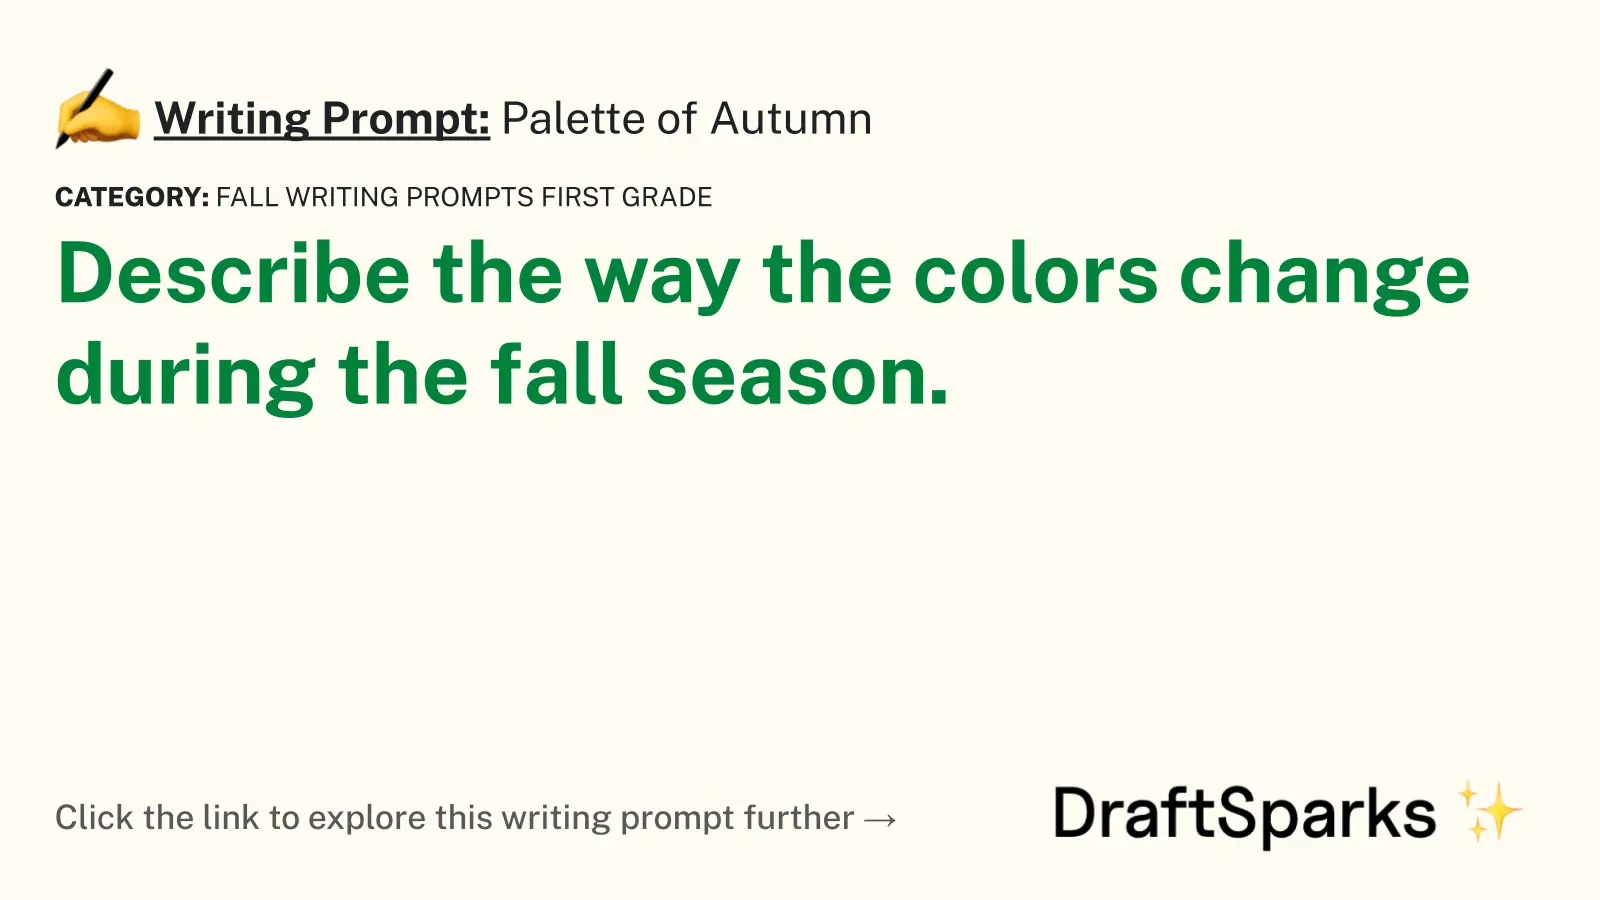 Palette of Autumn